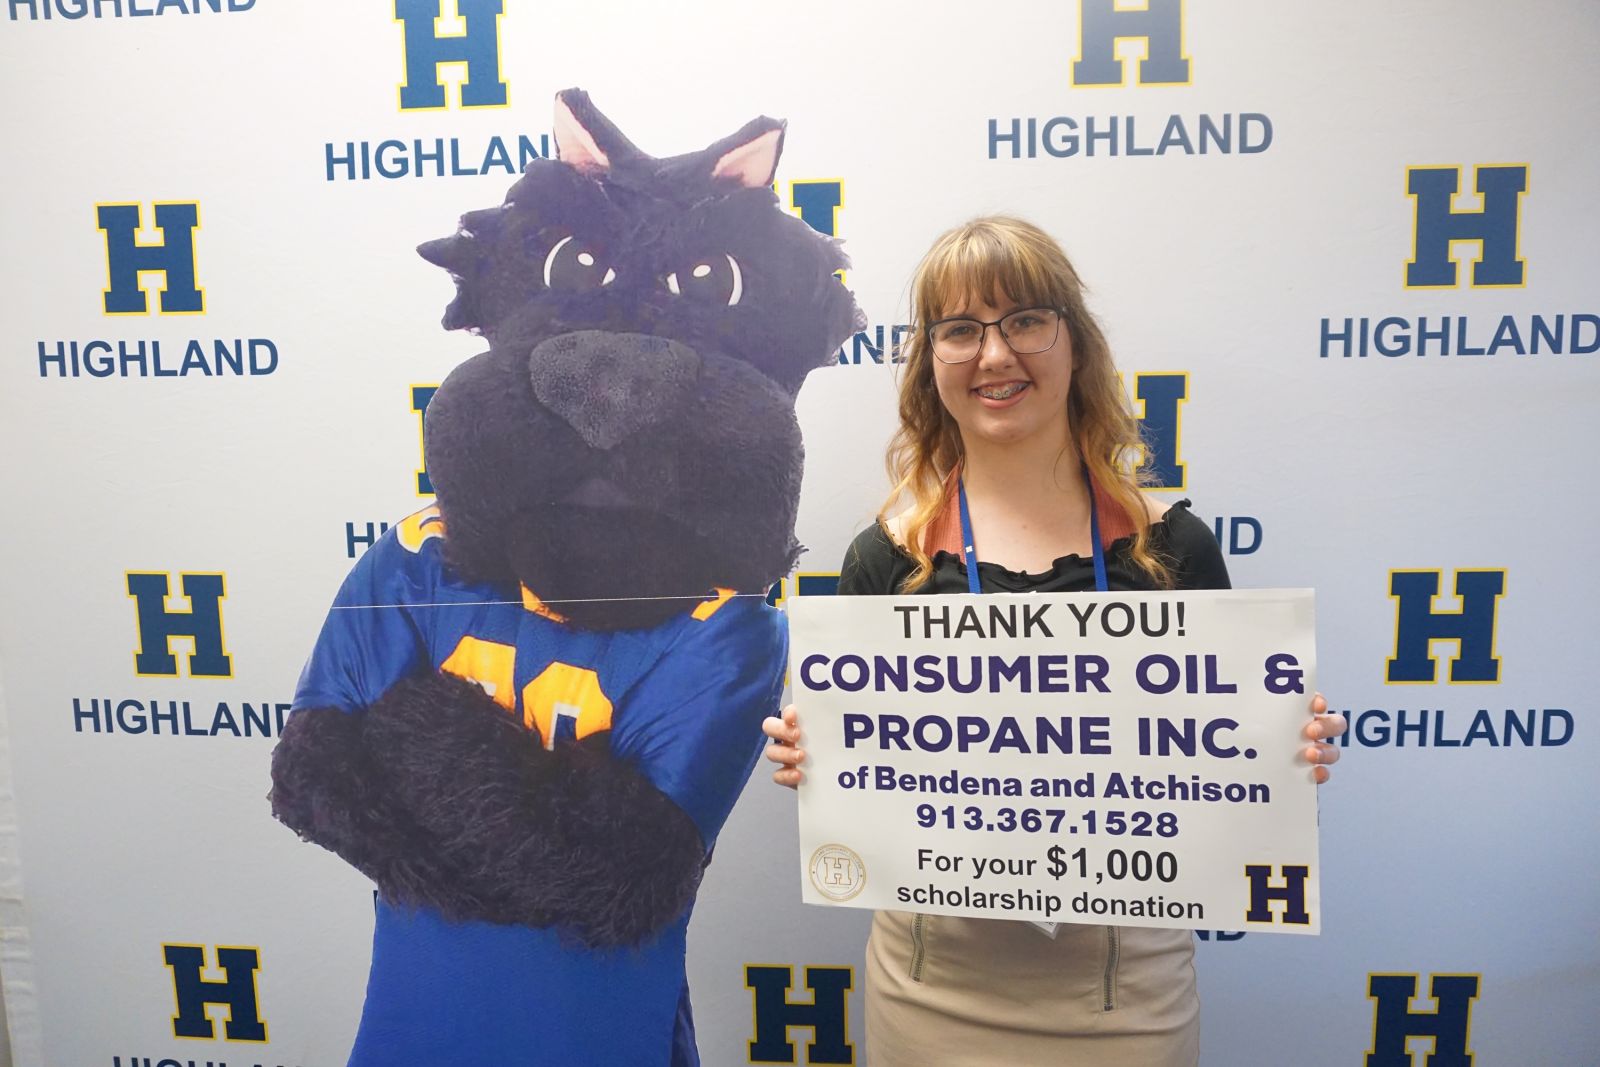 Haley Miller, a senior at Riverside High School, Wathena, KS won a $1000 scholarship sponsored Consumer Oil & Propane of Bendena & Atchison.